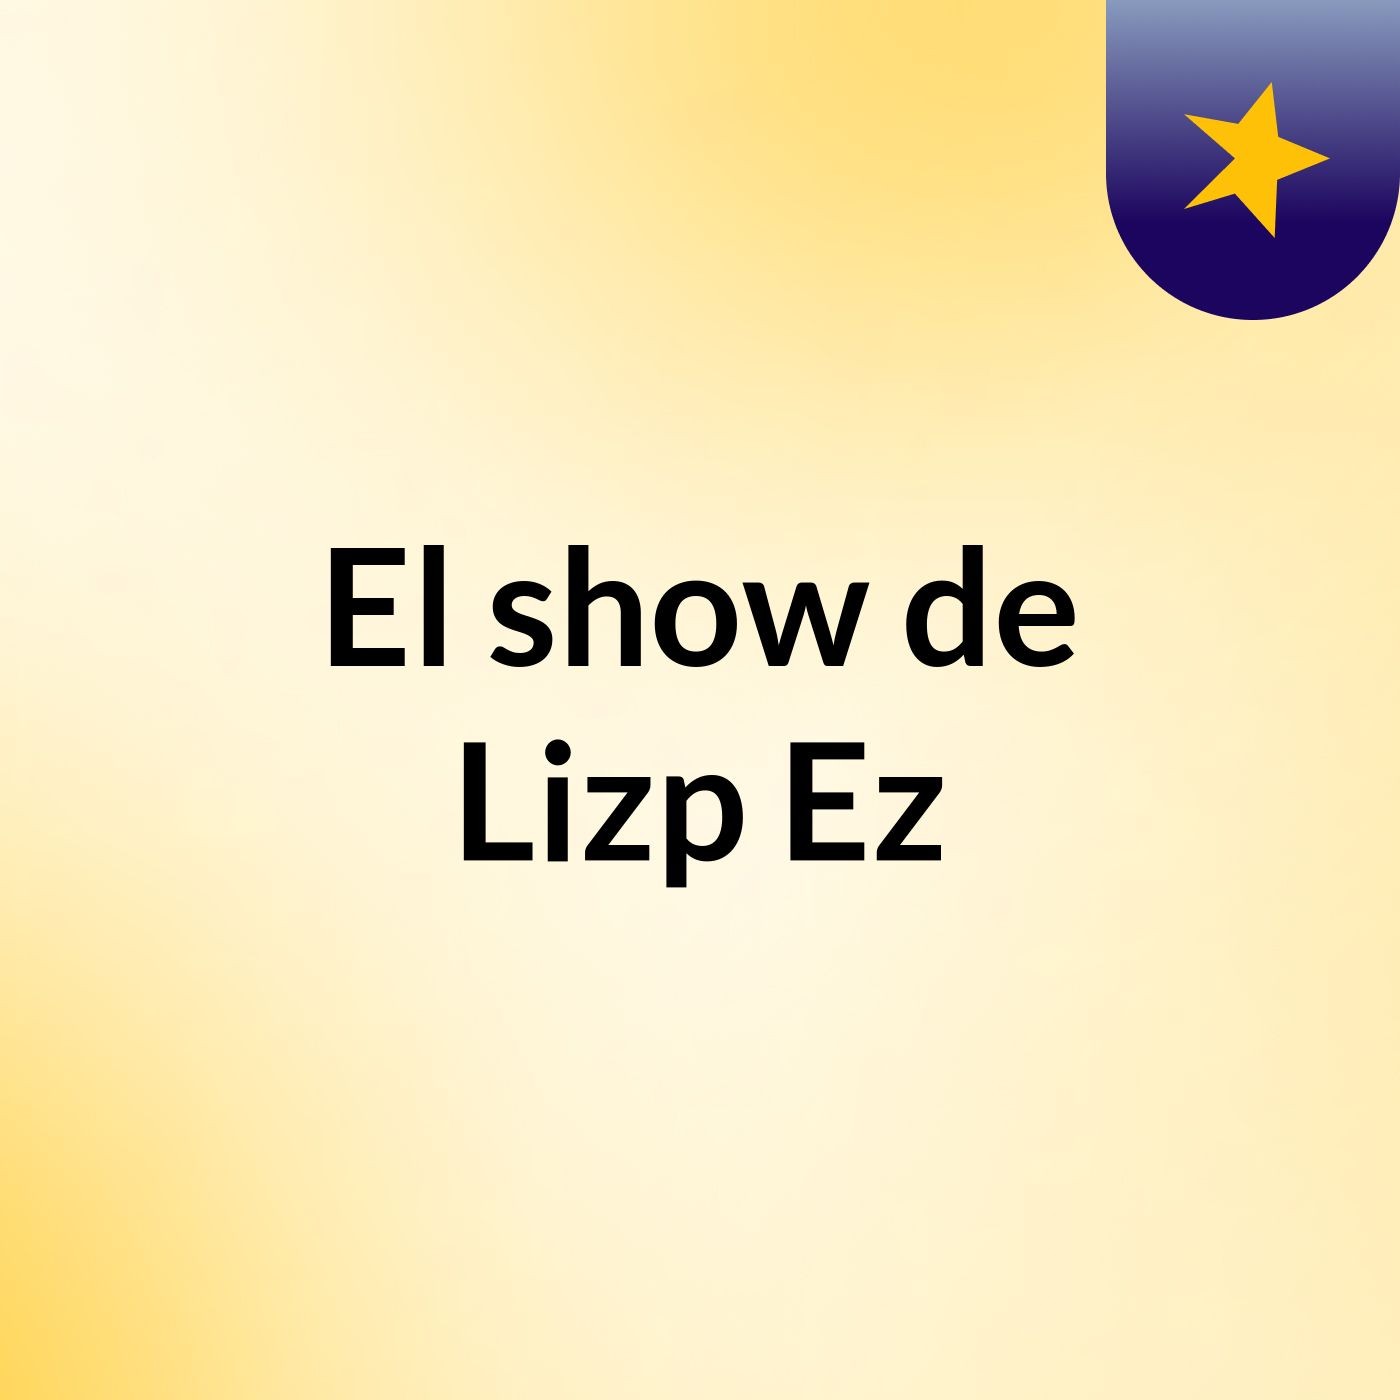 Episodio 13 - El show de Lizp Ez